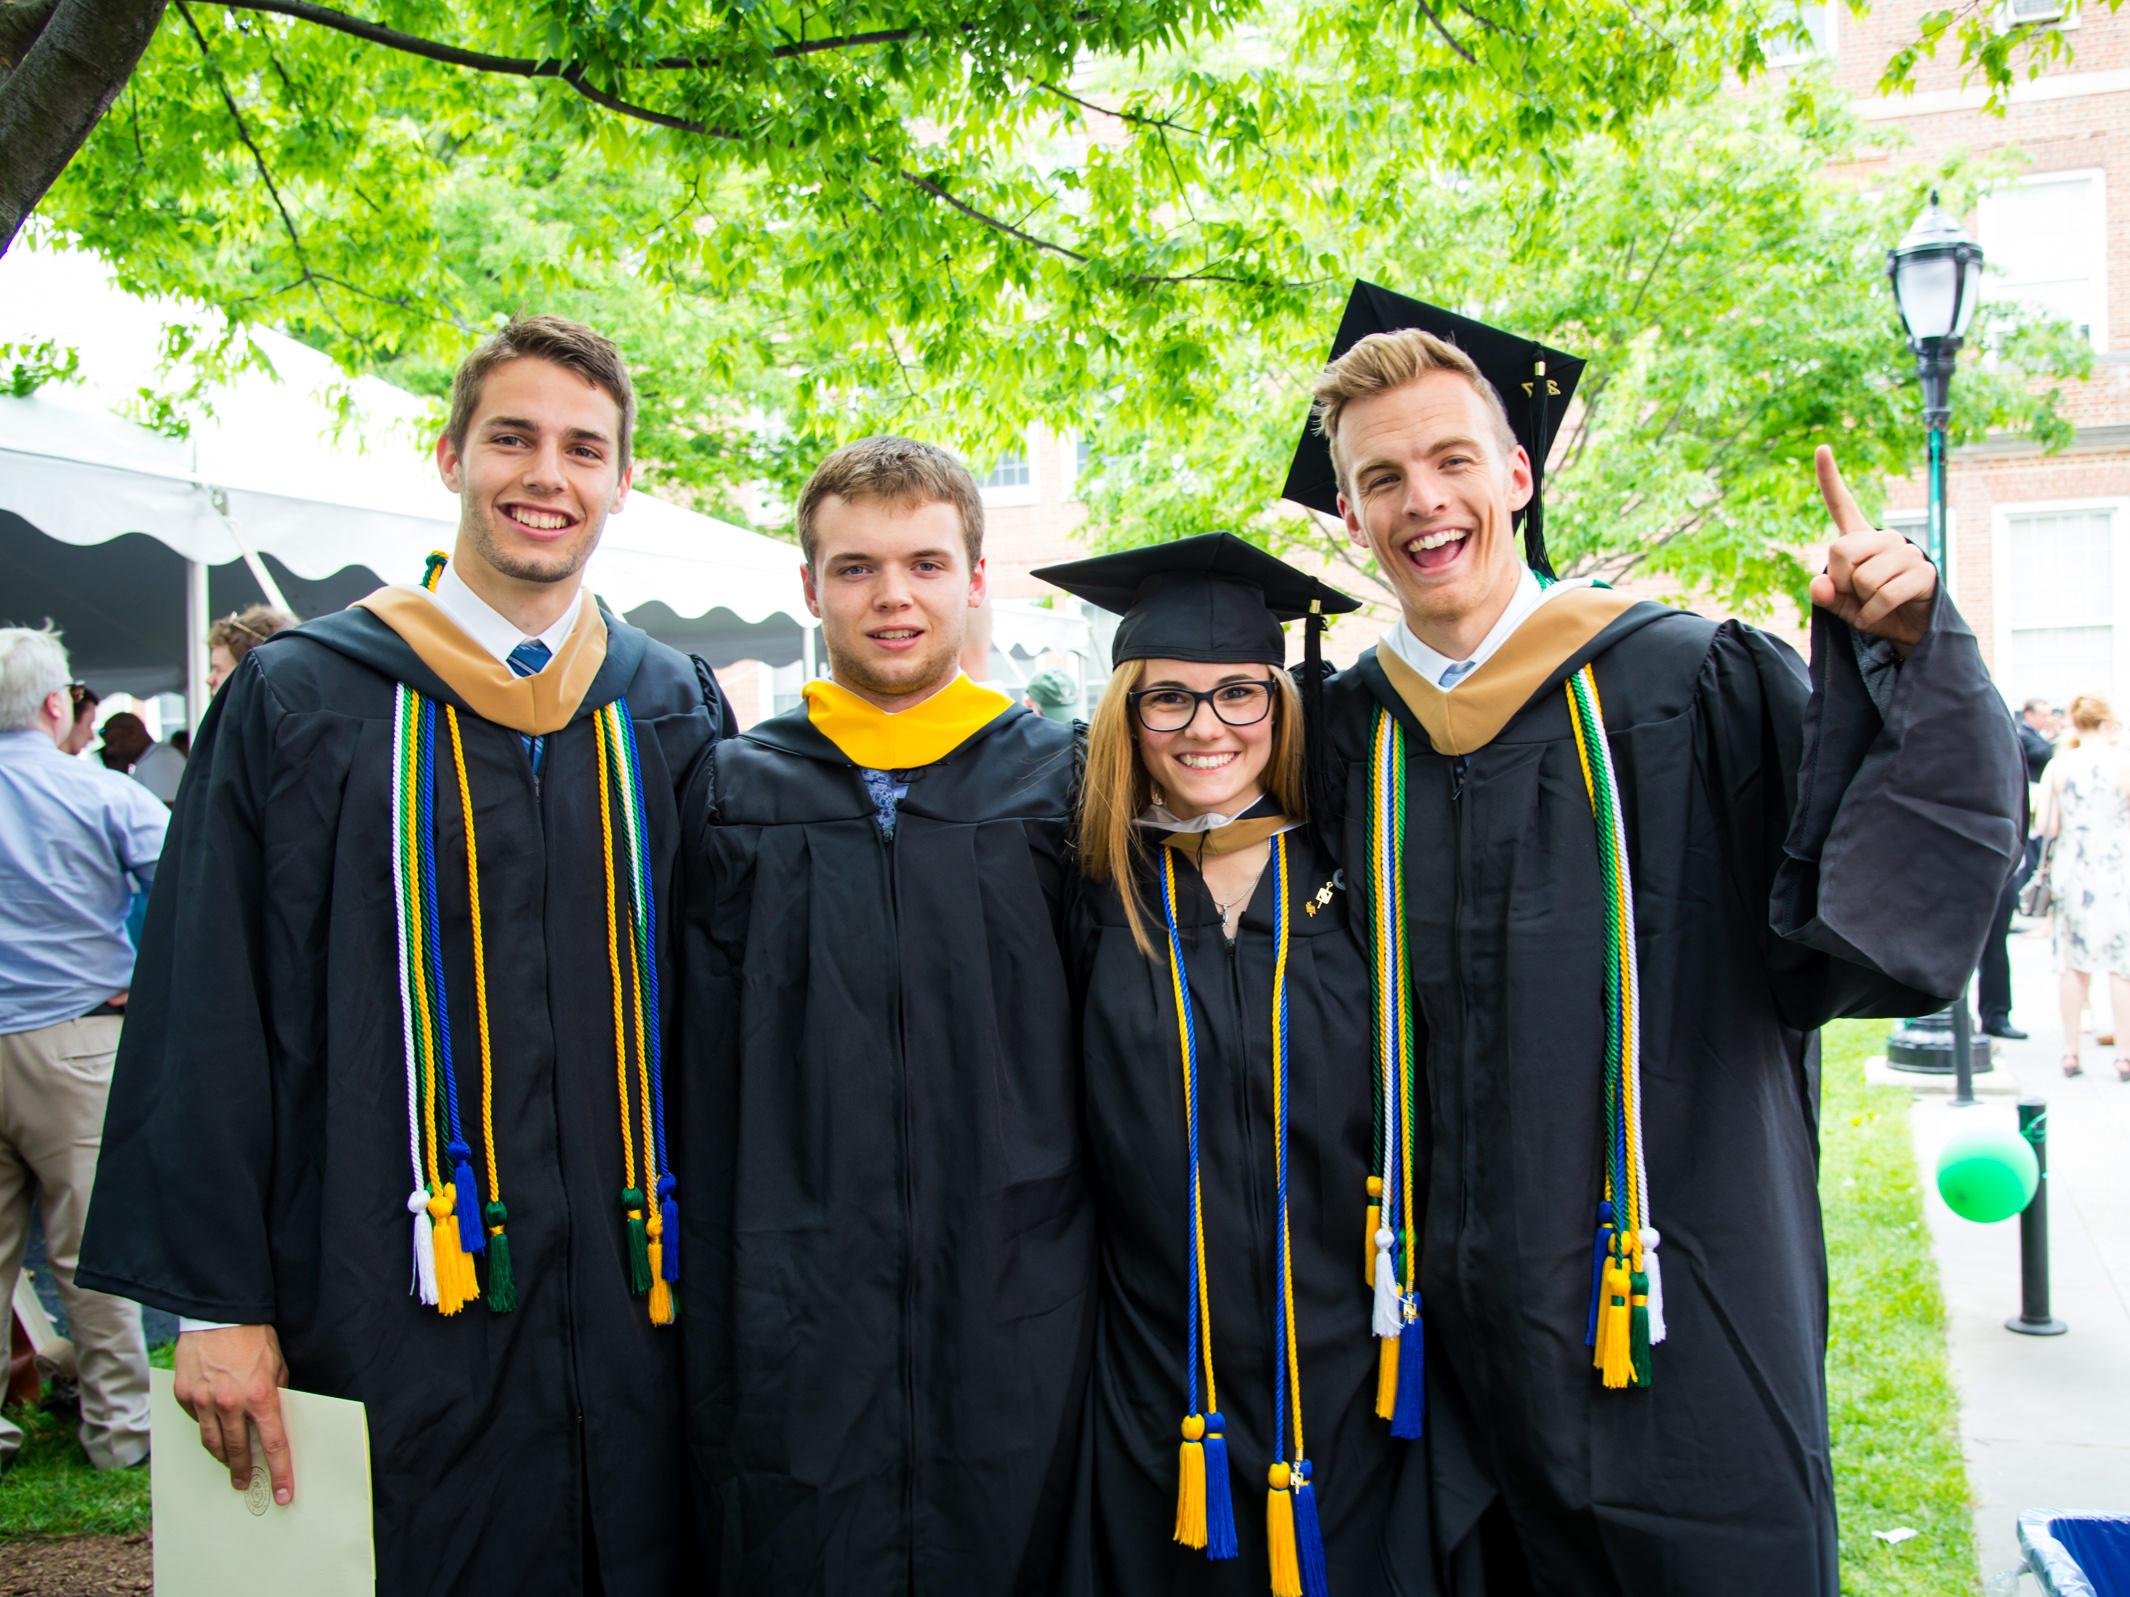 graduating seniors pose for a photo on the quad on graduation day